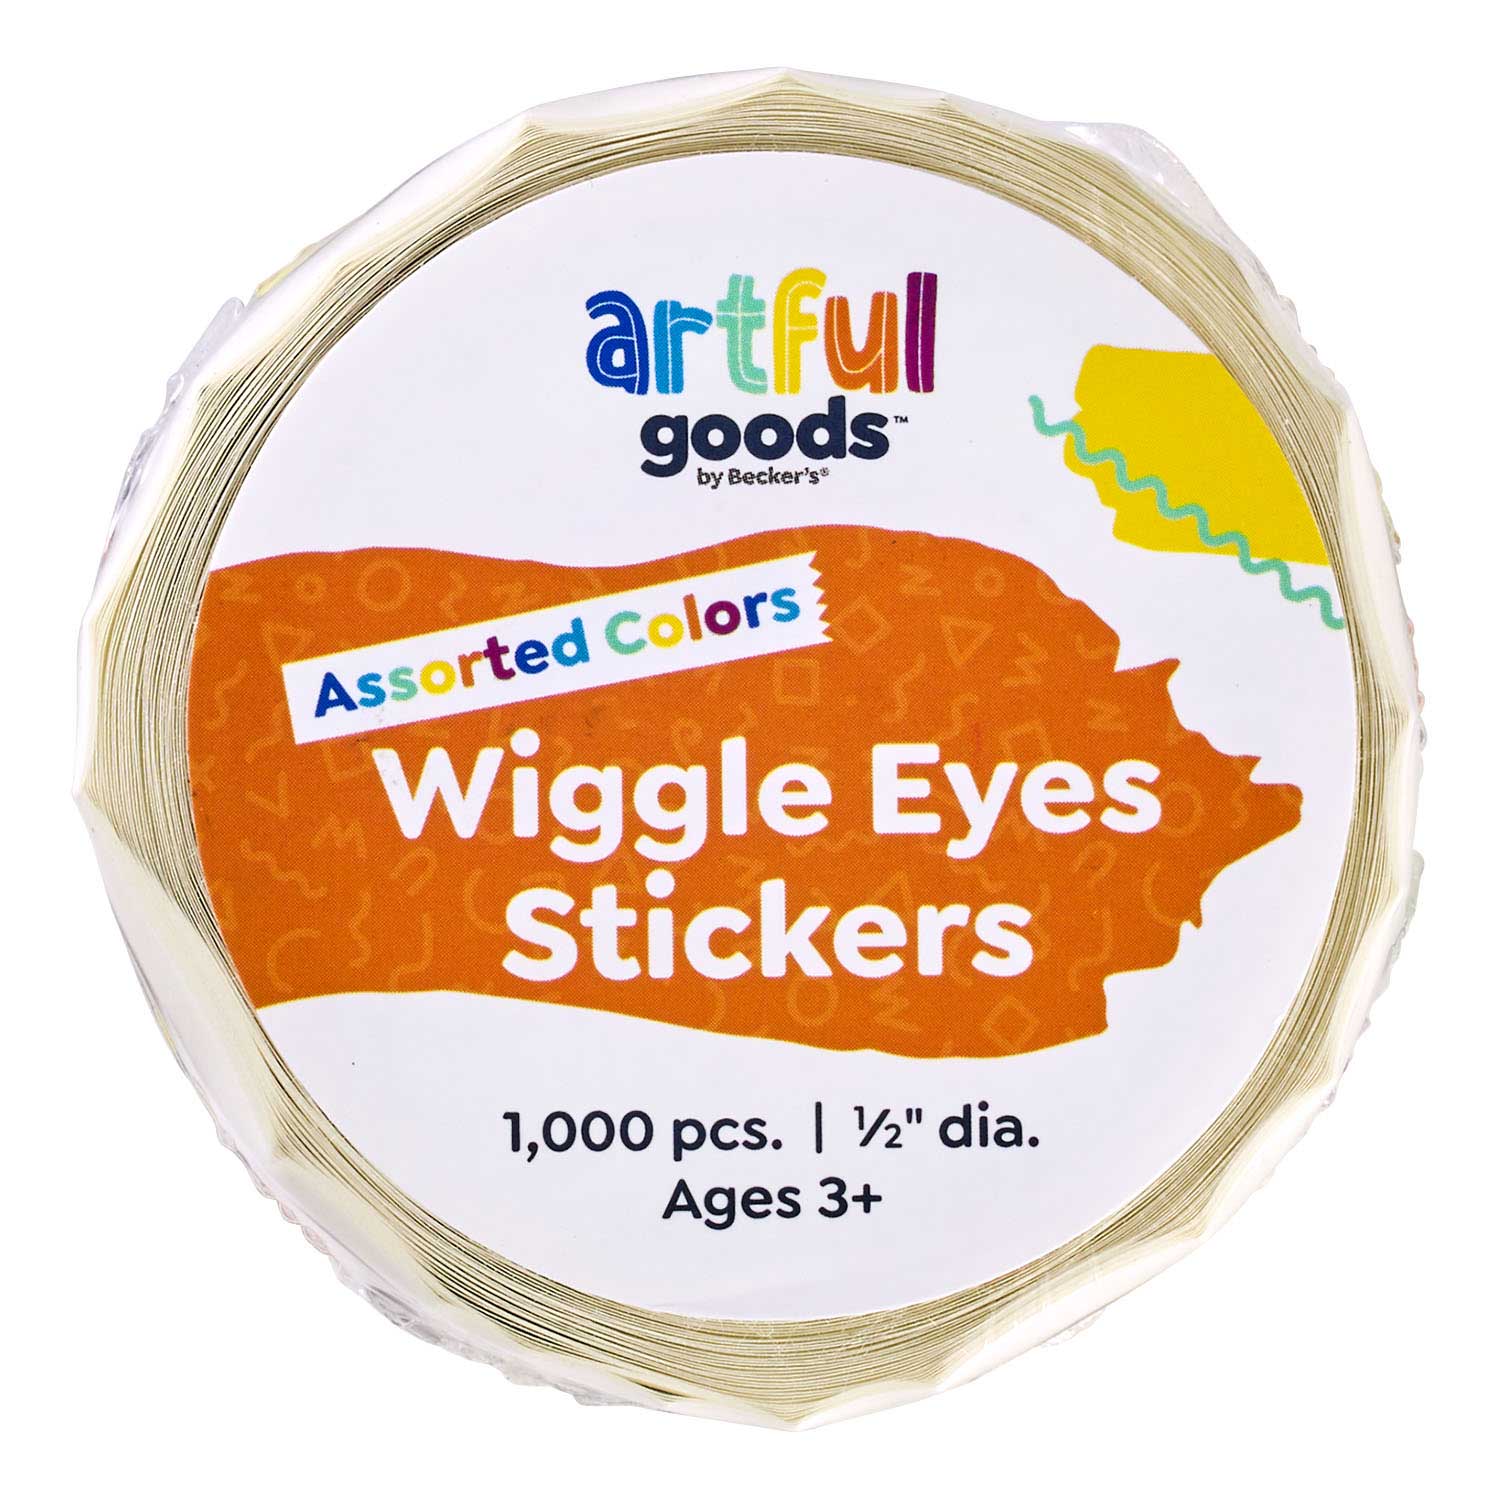 Artful Goods® Wiggle Eyes Stickers